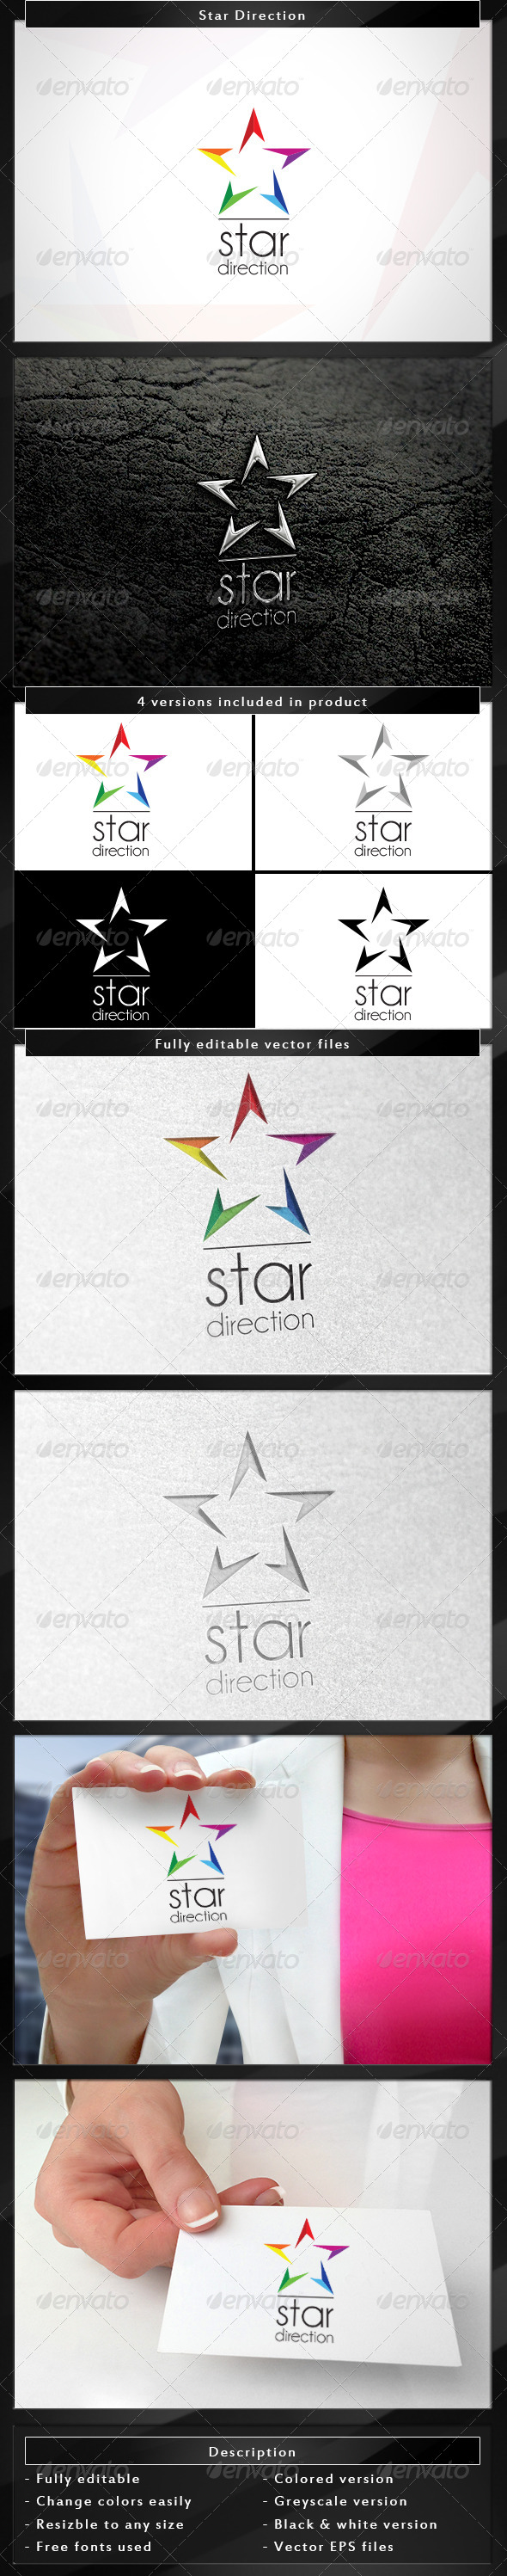 Star Direction